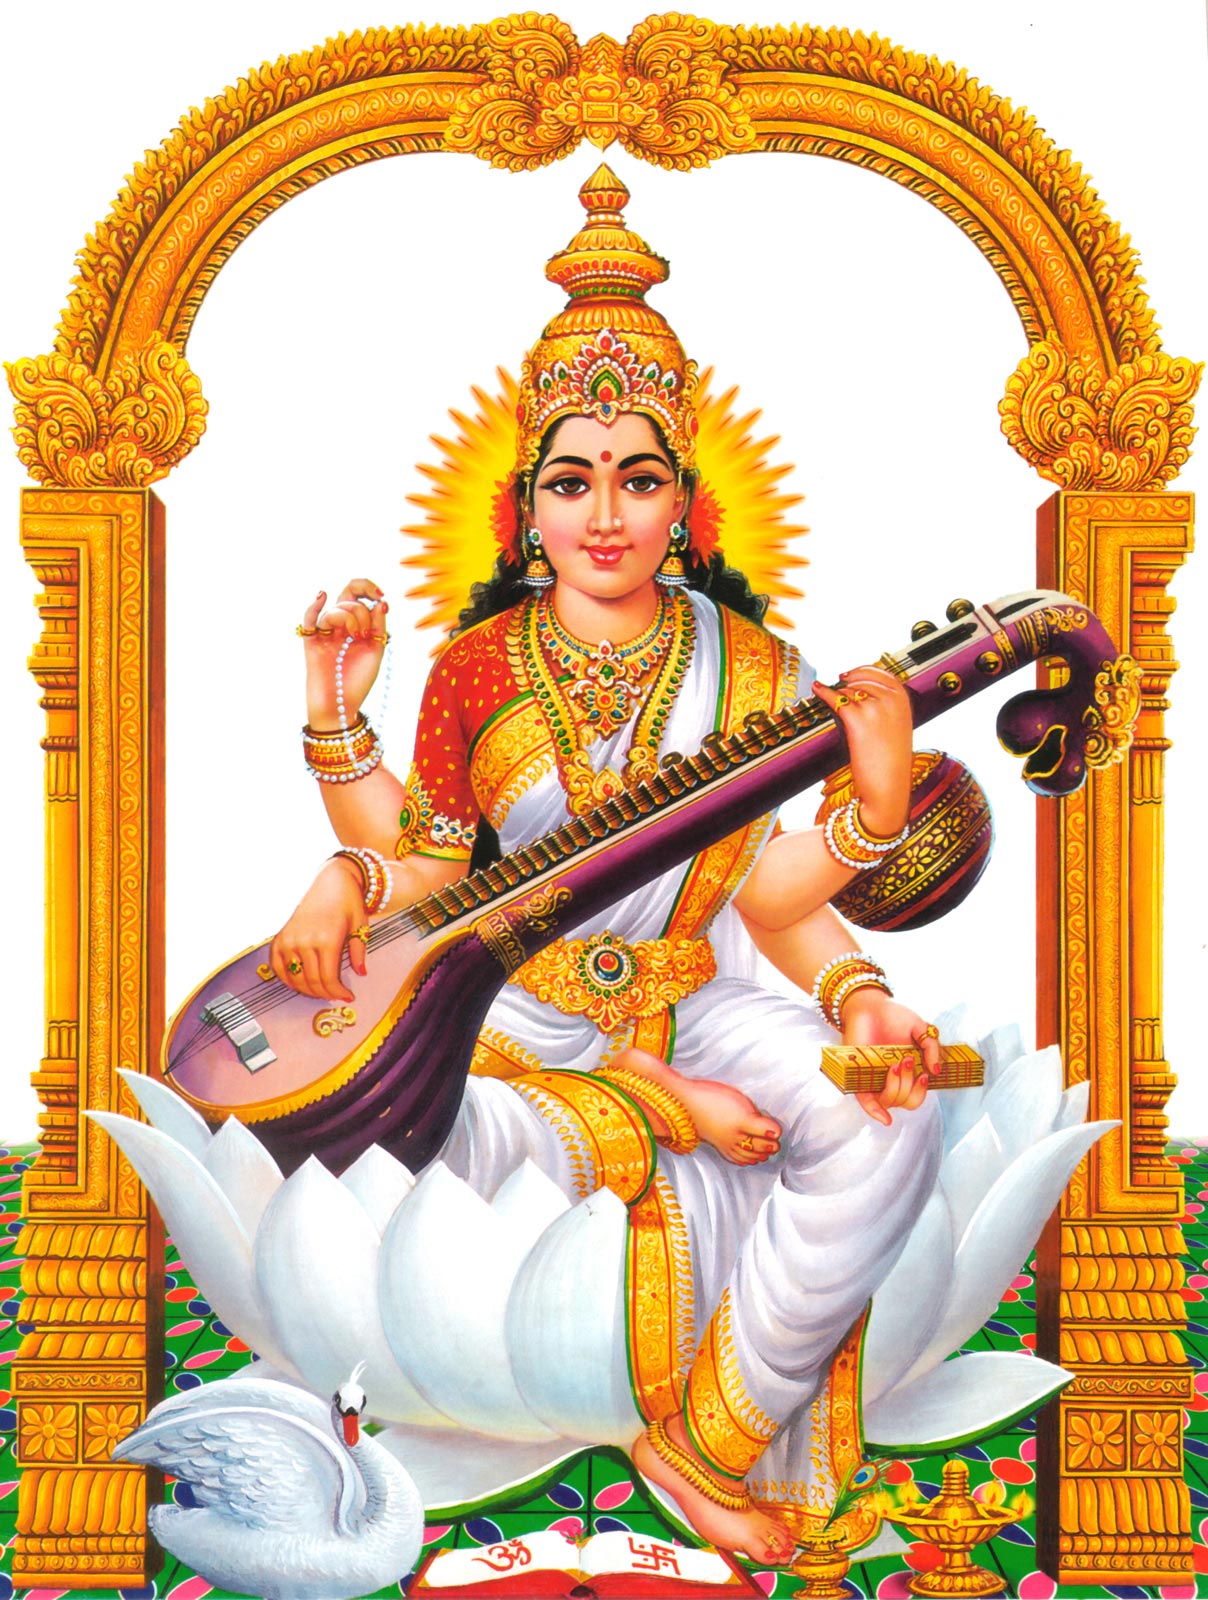 hindu gott tapete hd 1920x1080,indische musikinstrumente,gezupfte saiteninstrumente,musikinstrument,guru,hindu tempel